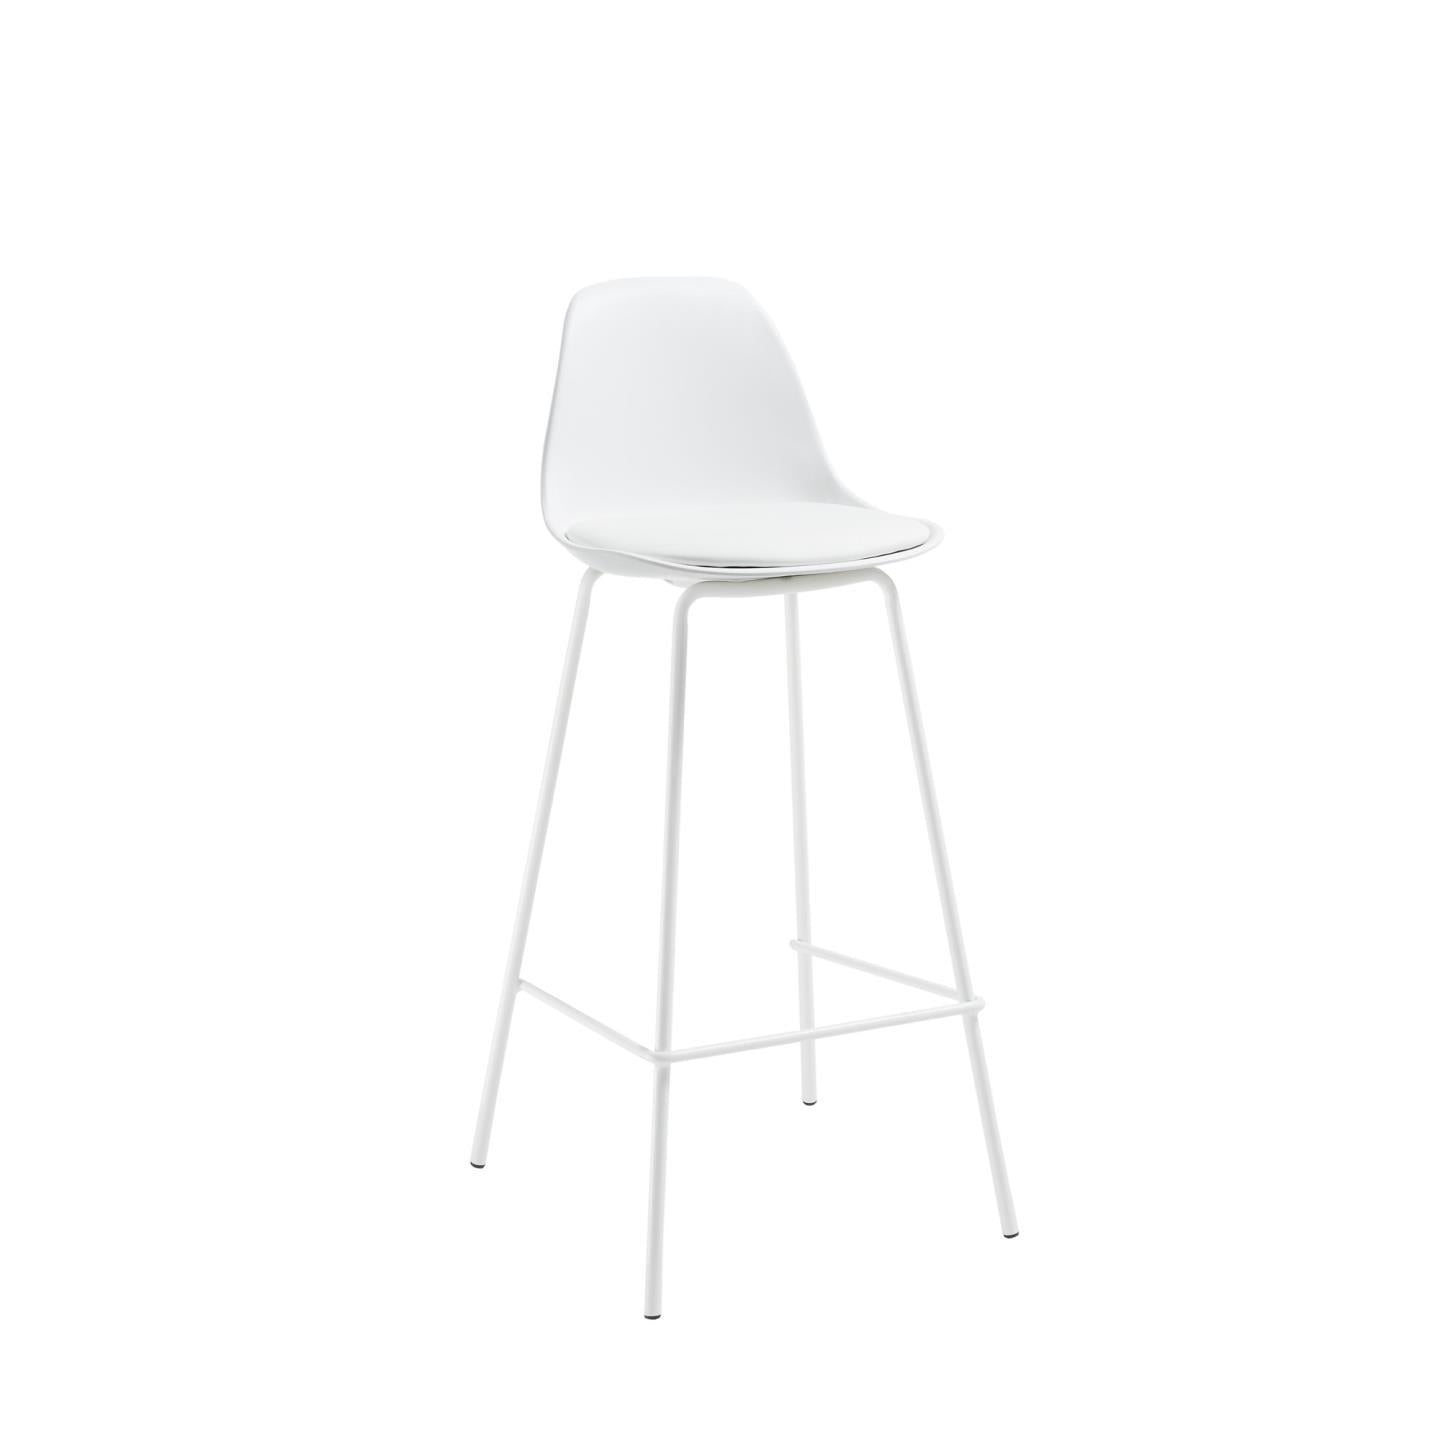 65 cm high Brighter stool